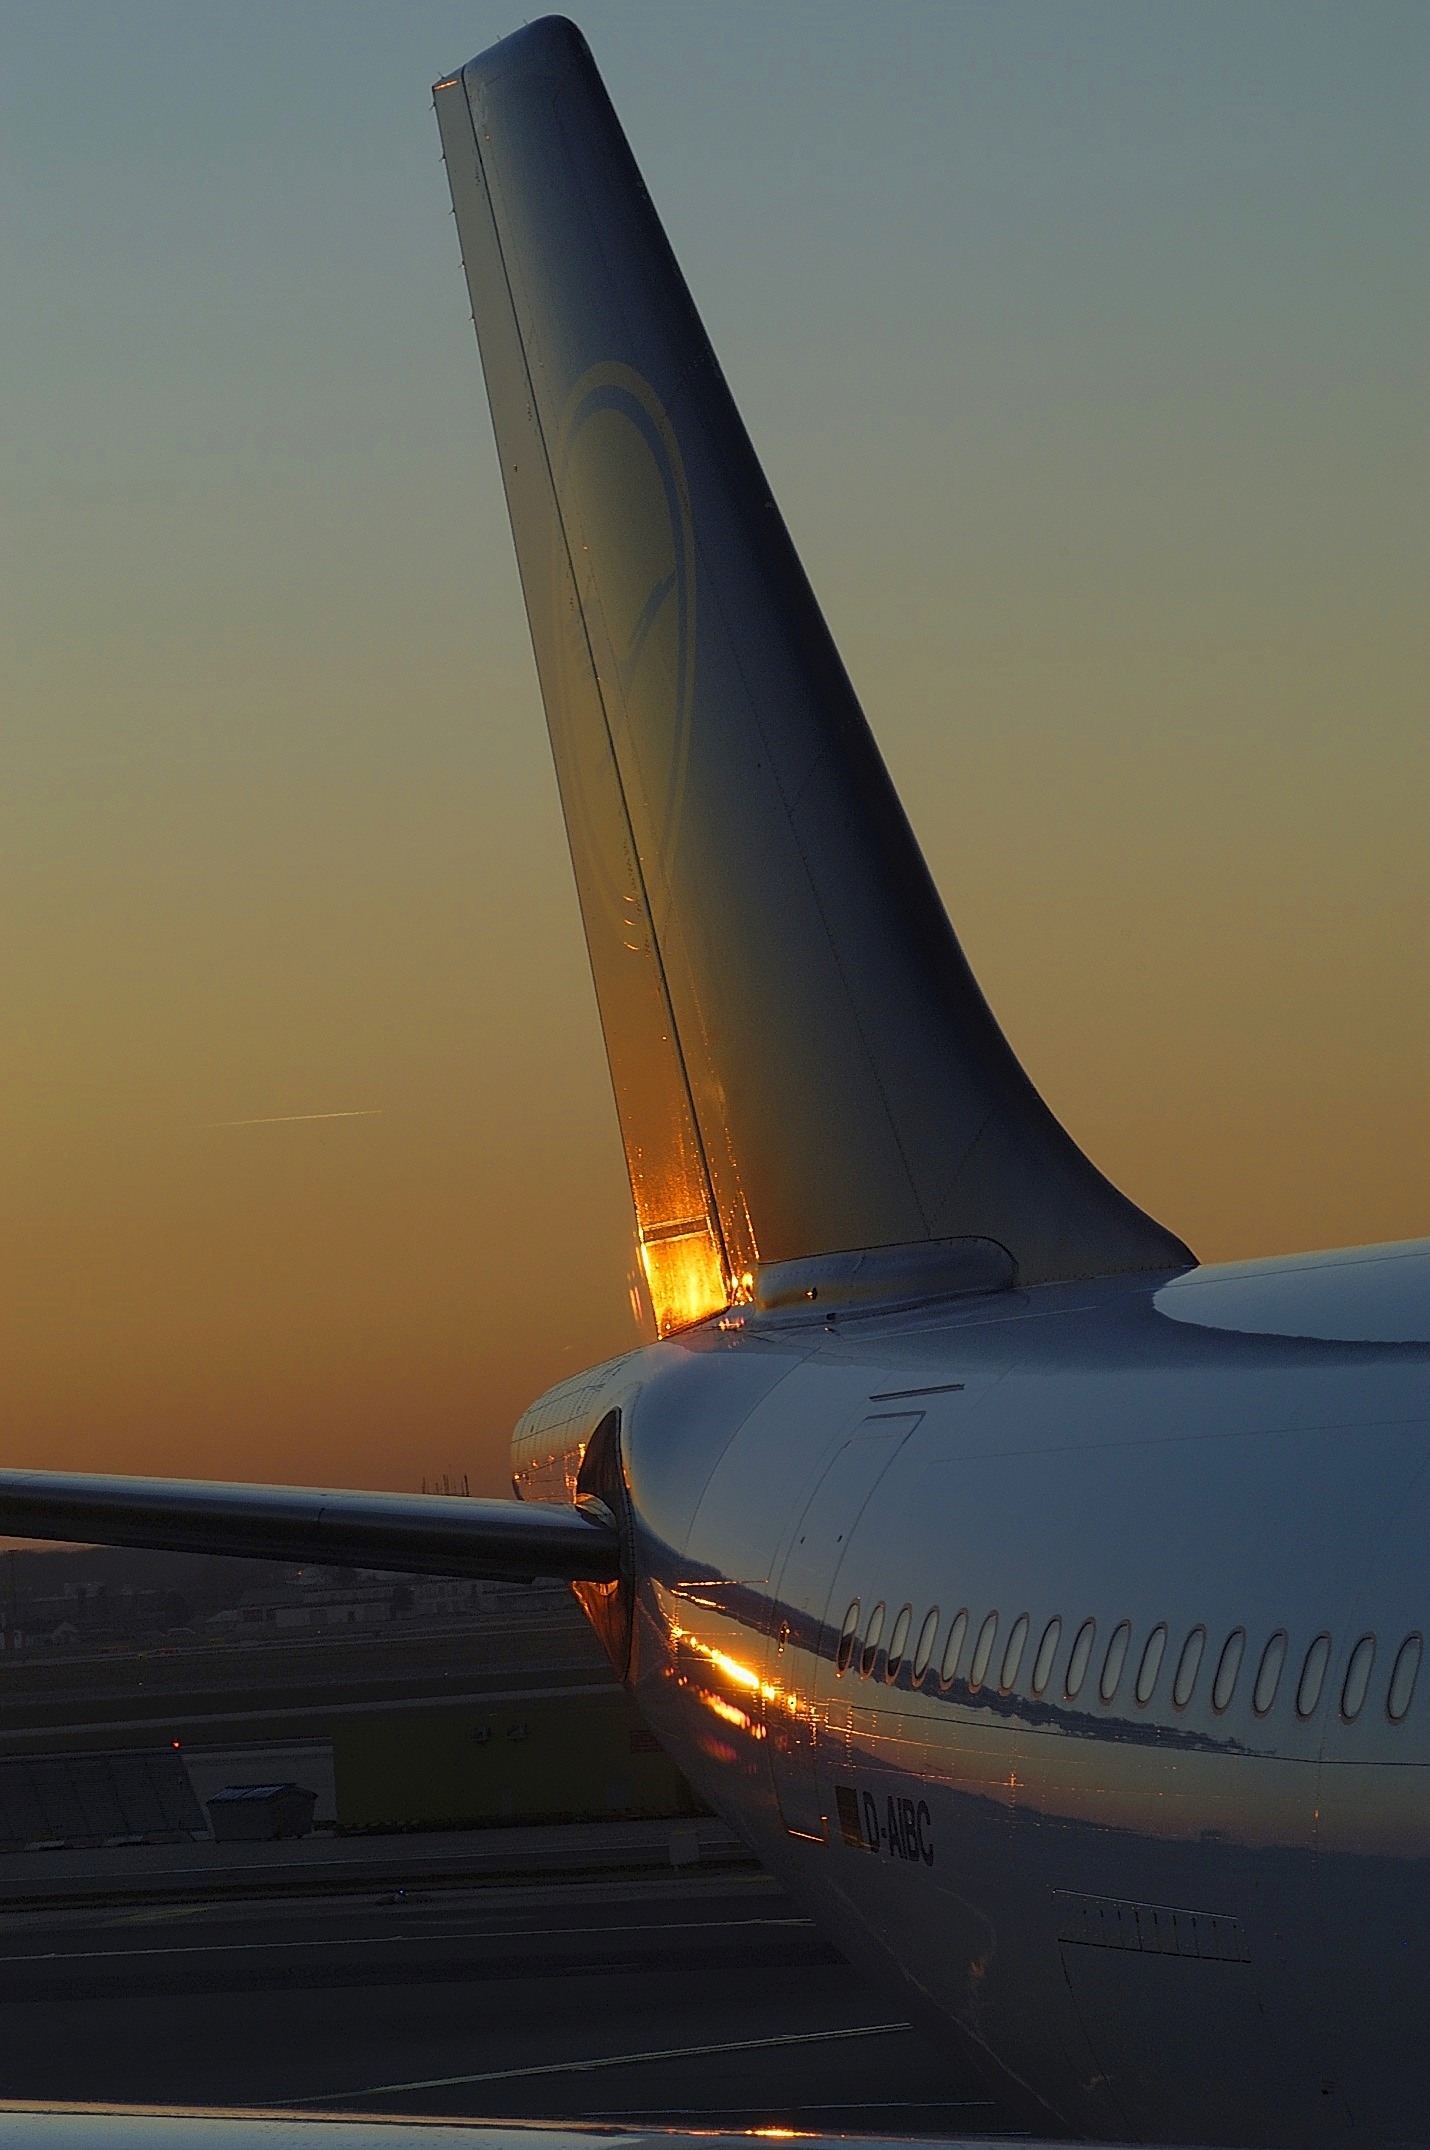 Lufthansa Tail, A340-200, D-AIBCH, at Sunrise